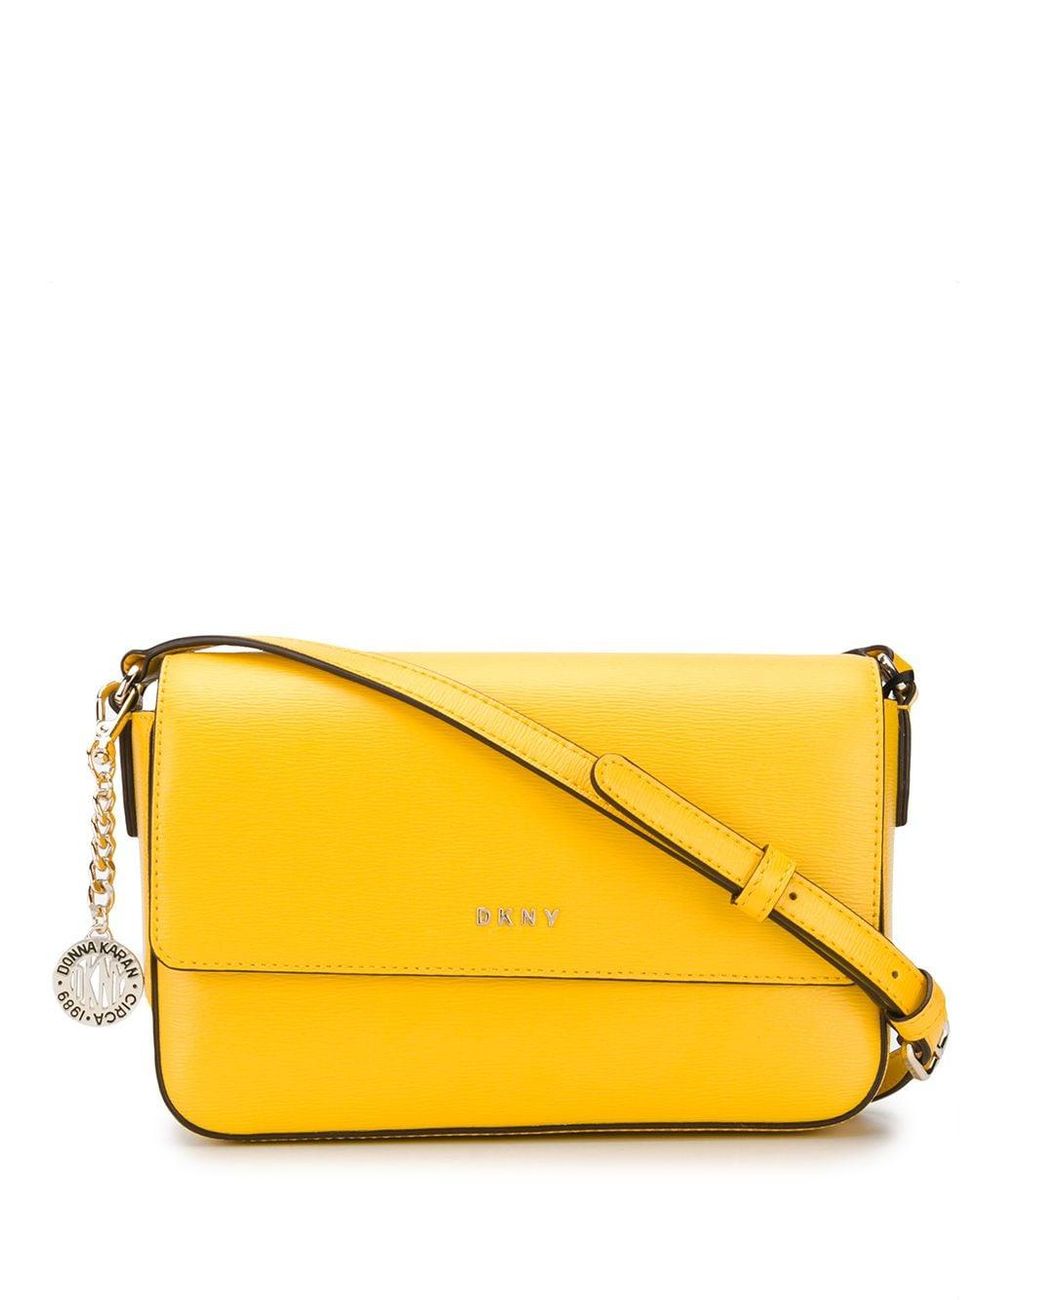 DKNY Bryant Leather Crossbody Bag in Yellow | Lyst